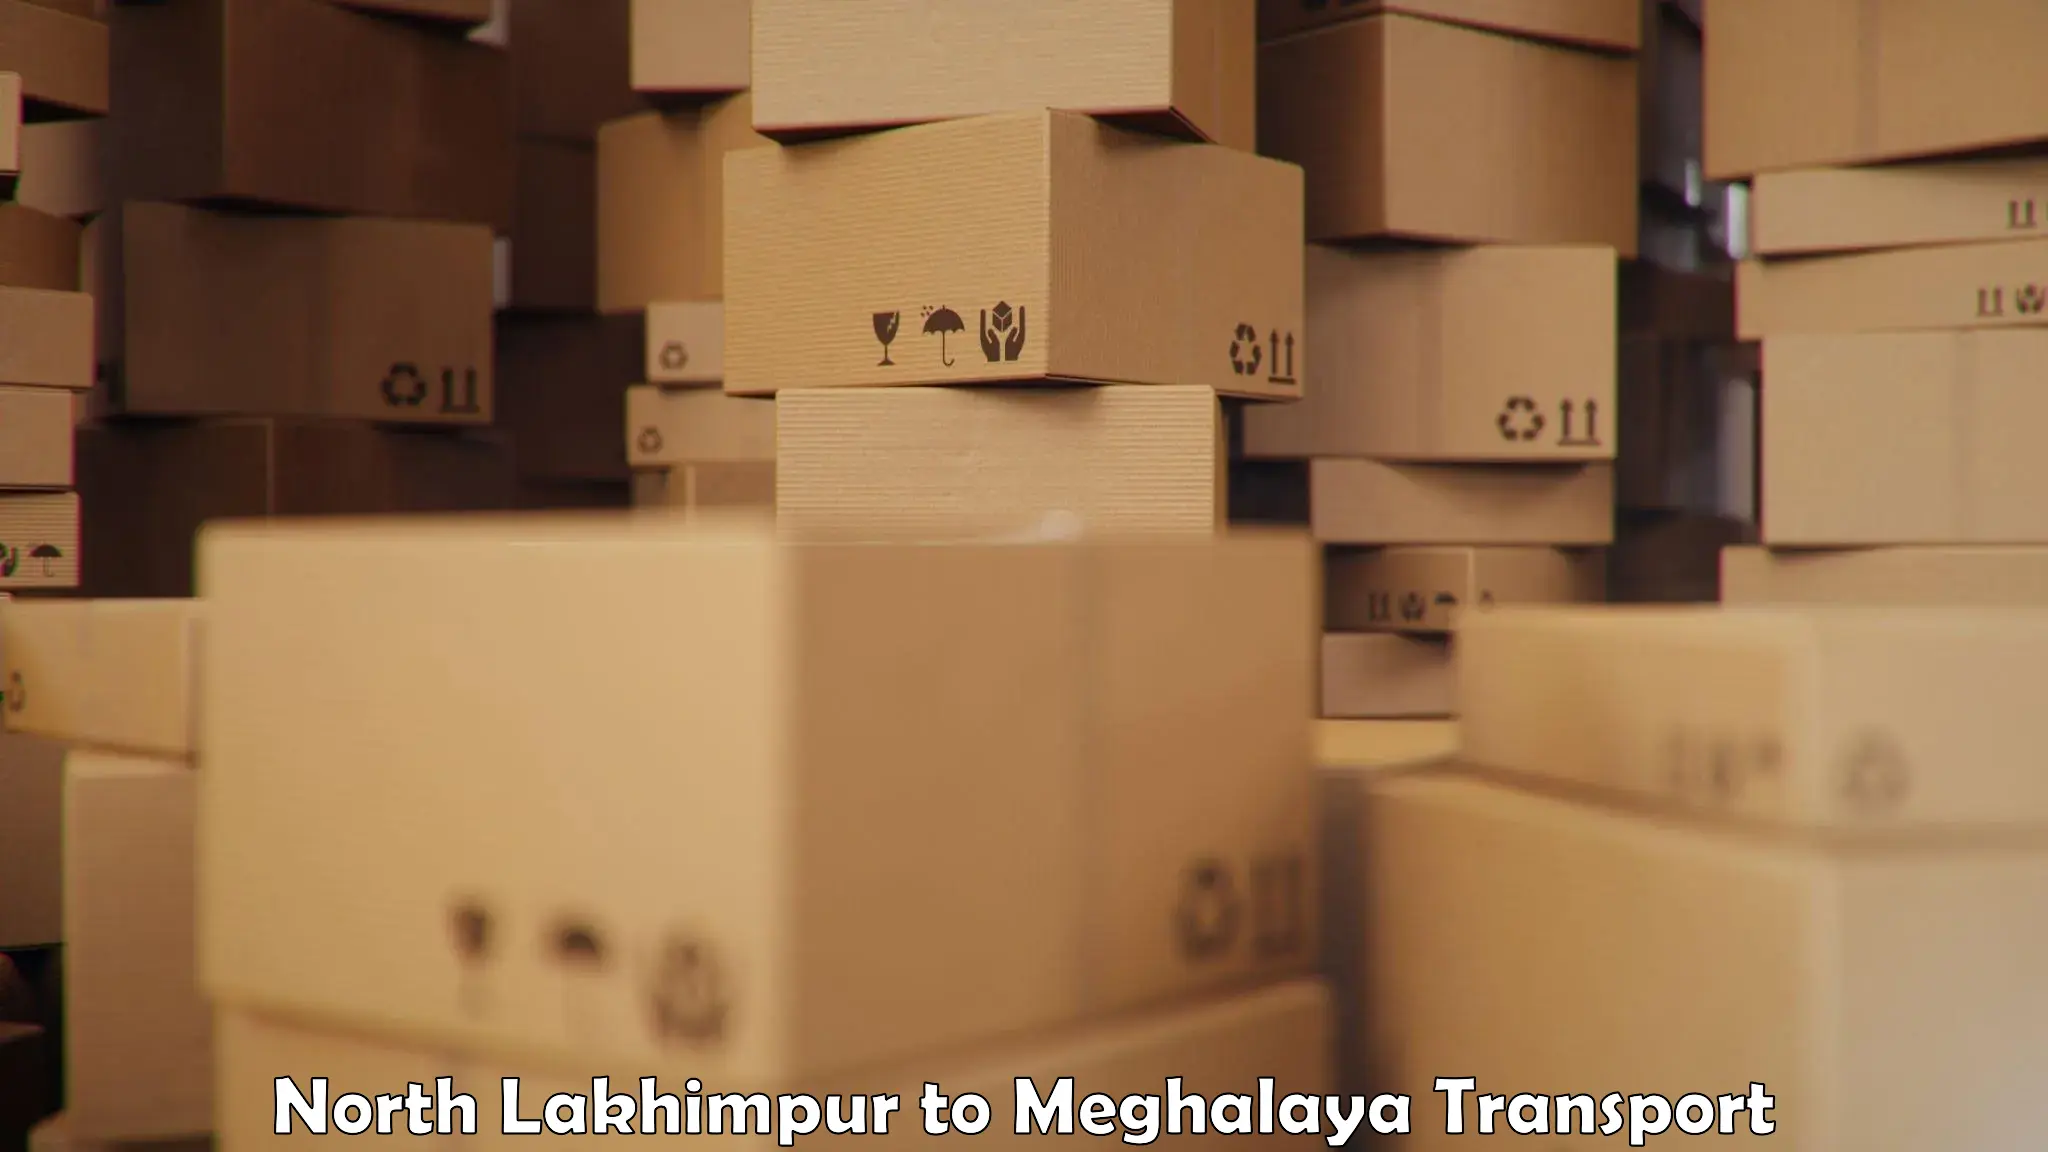 Furniture transport service North Lakhimpur to Tura